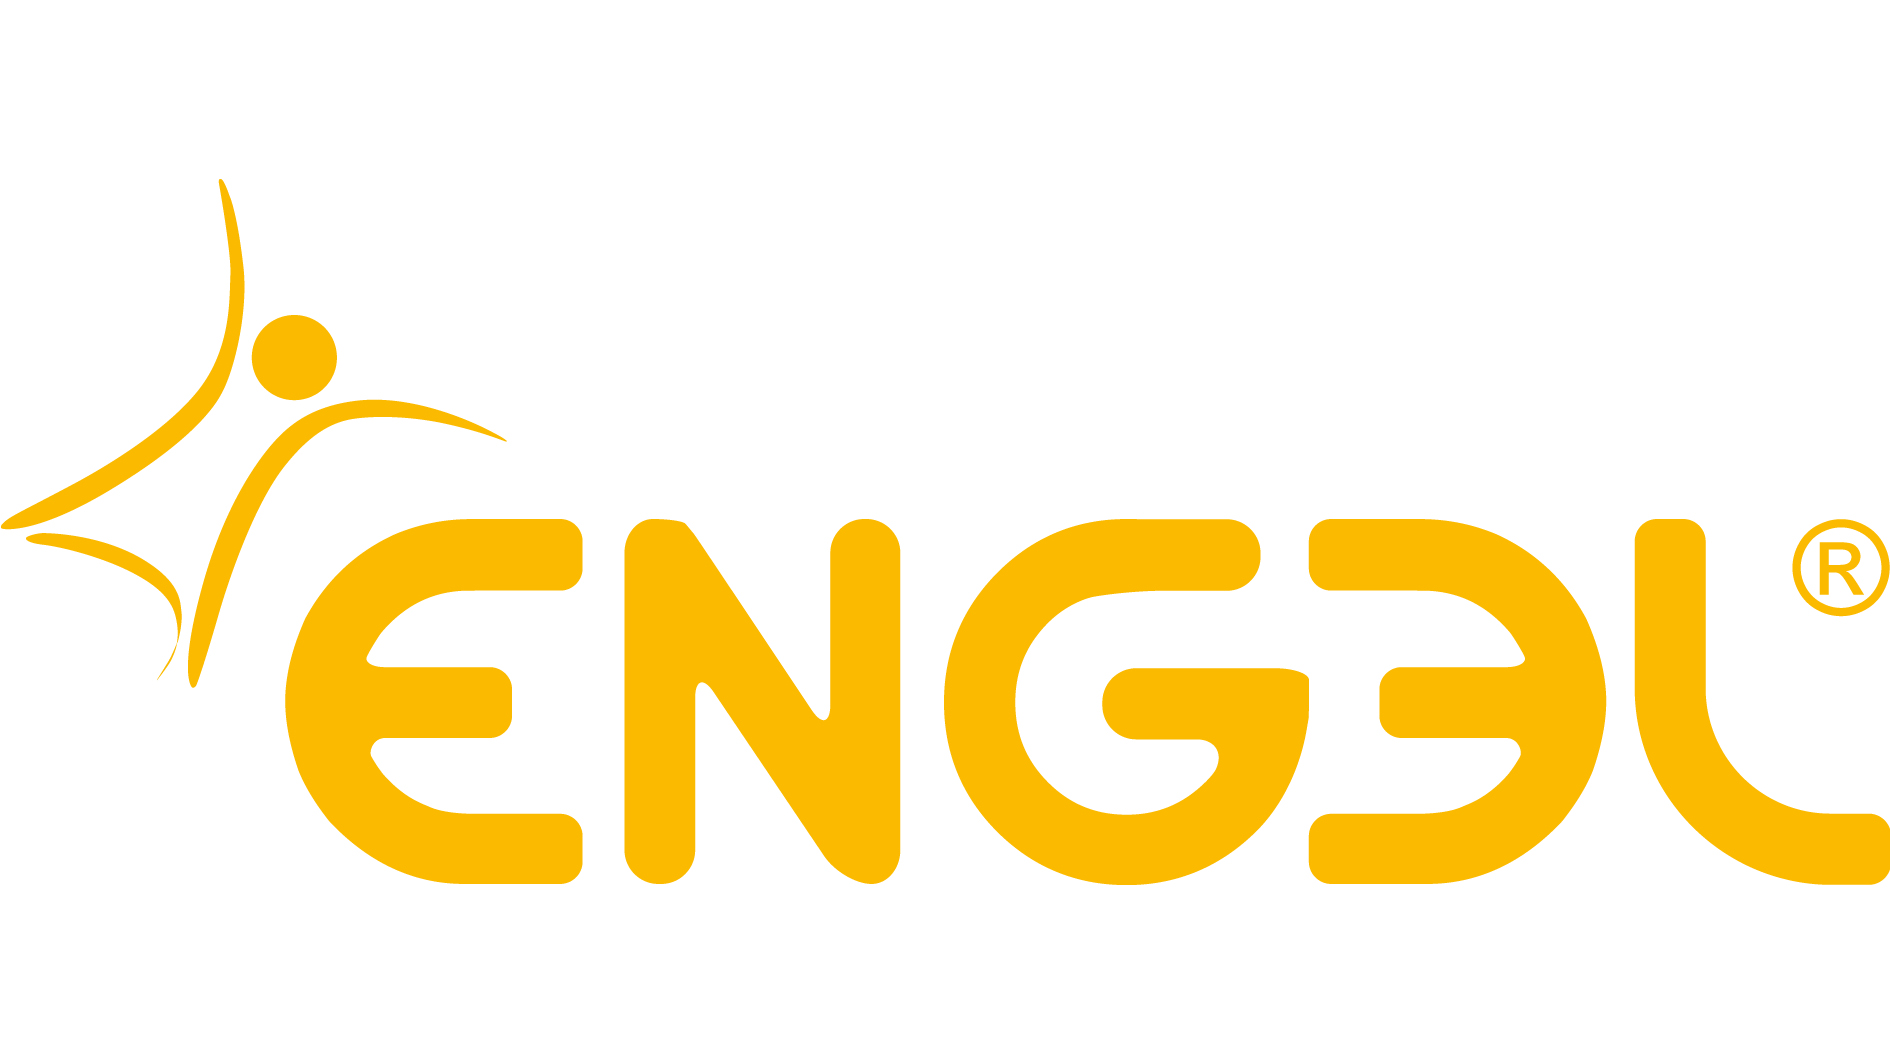 Engel Real Estate logo